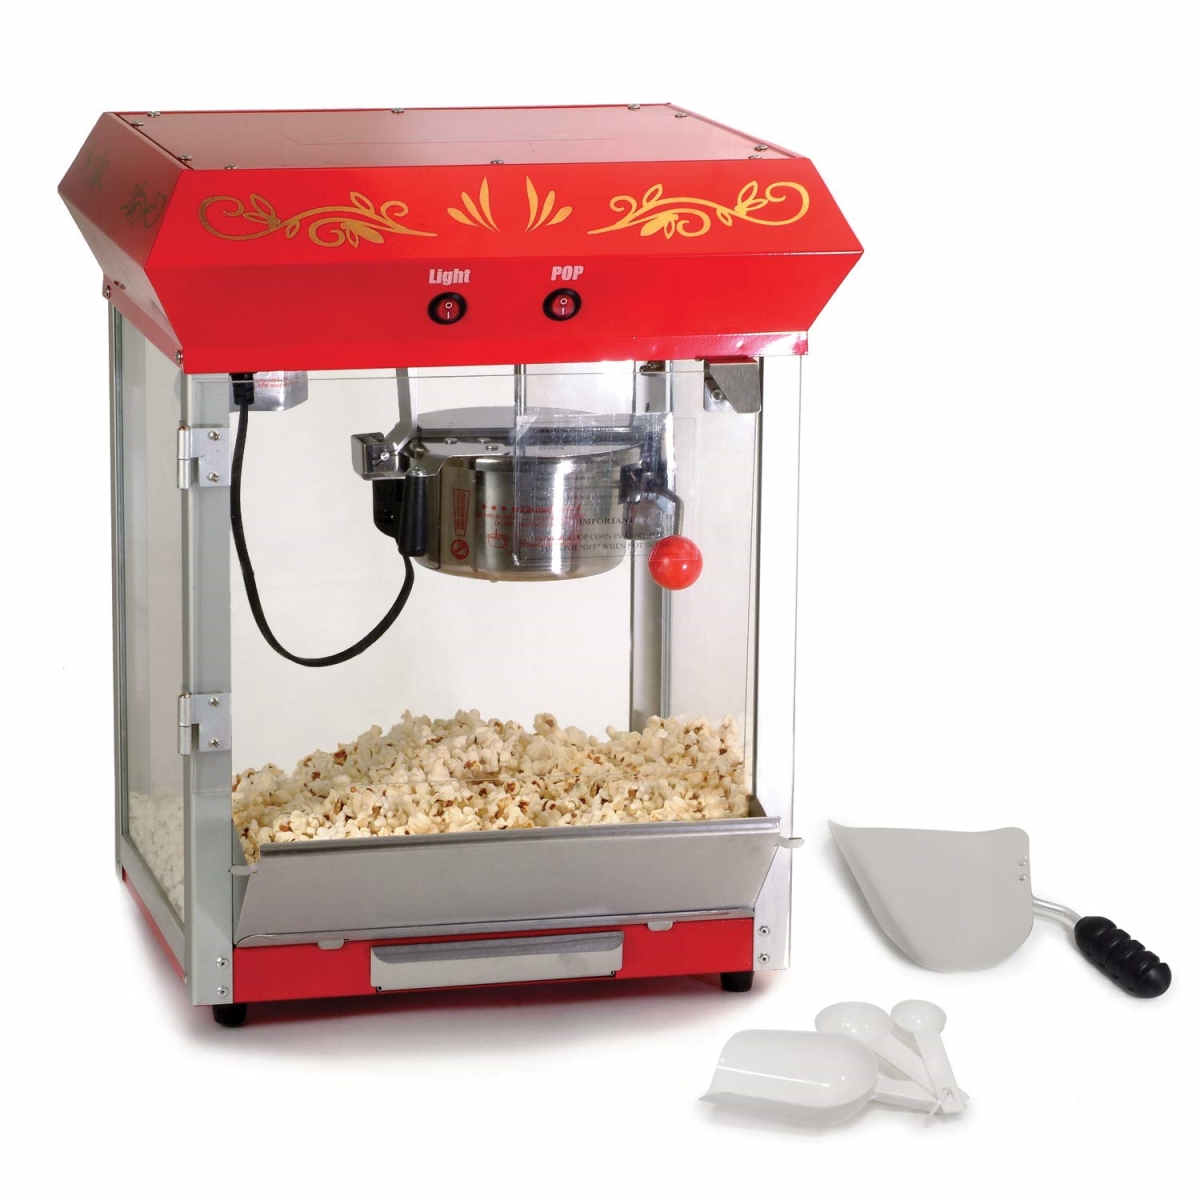 Epm-487 Moz Kettle Tabletop Popcorn Popper - Red